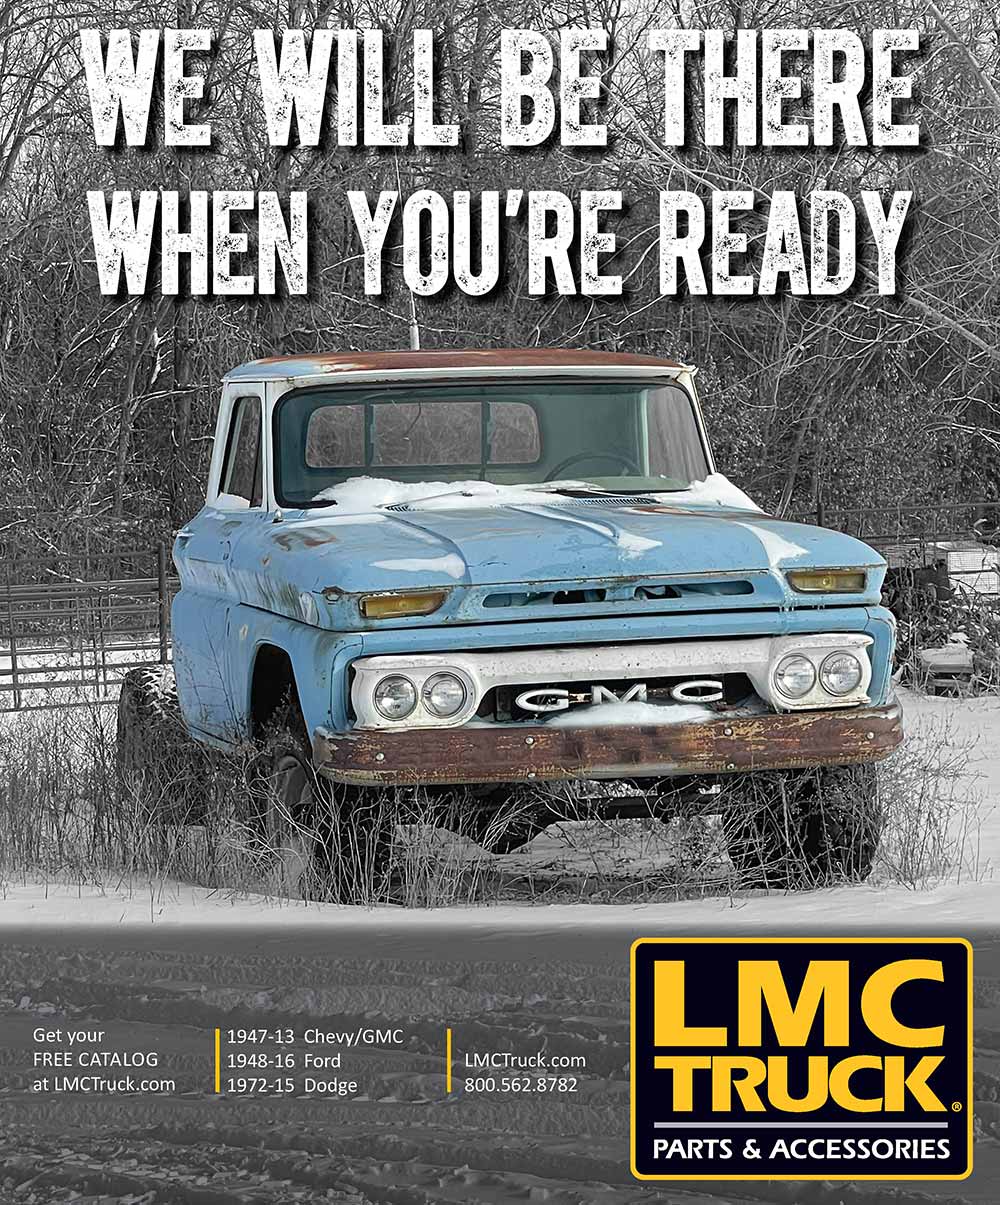 LMC Truck Advertisement